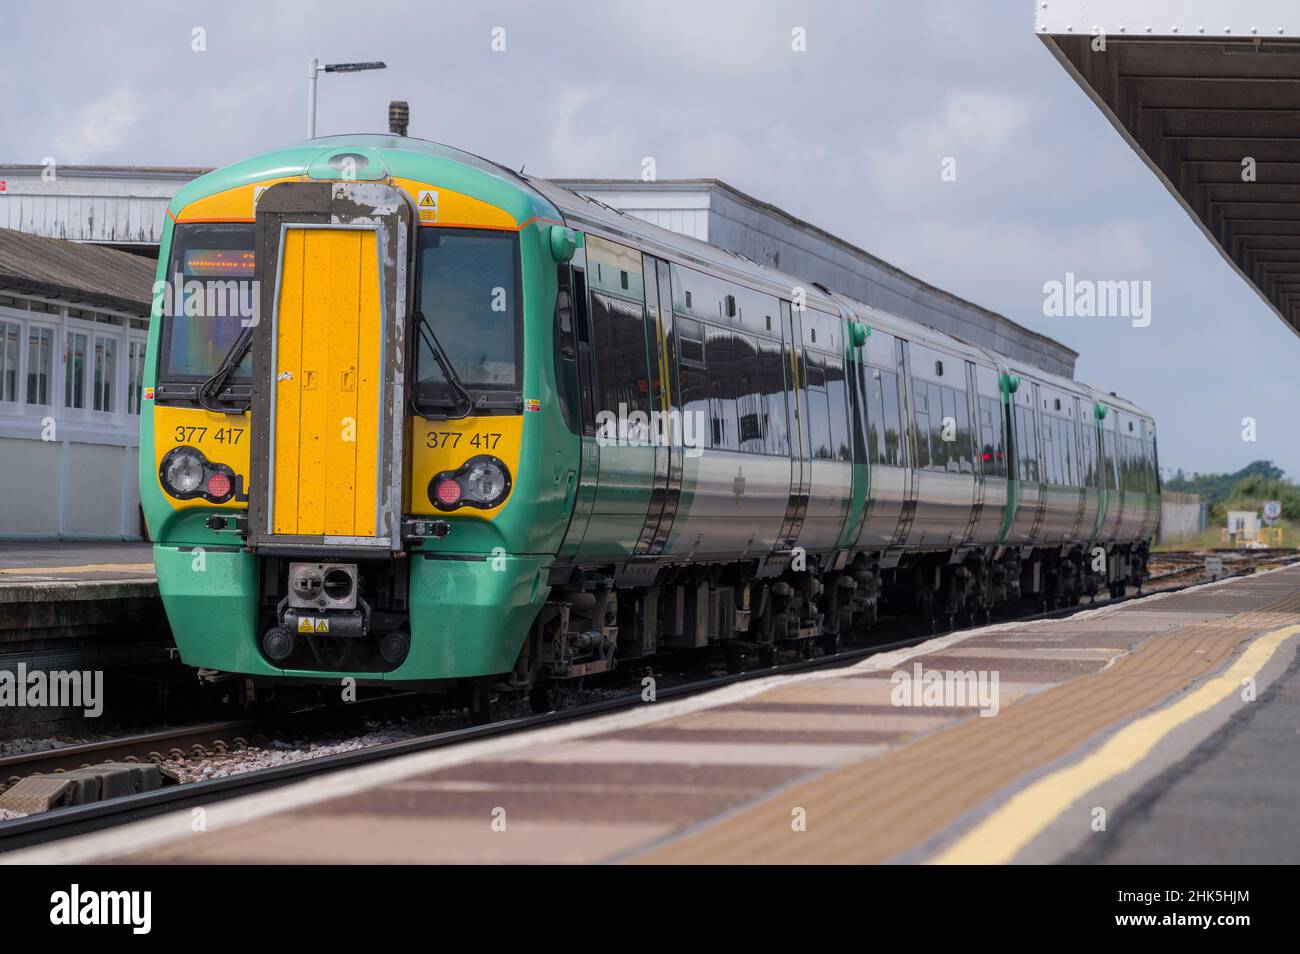 Southern Railway Class 377 Personenzug wartet auf Passagiere an Bord eines Bahnhofs in London, England. Stockfoto